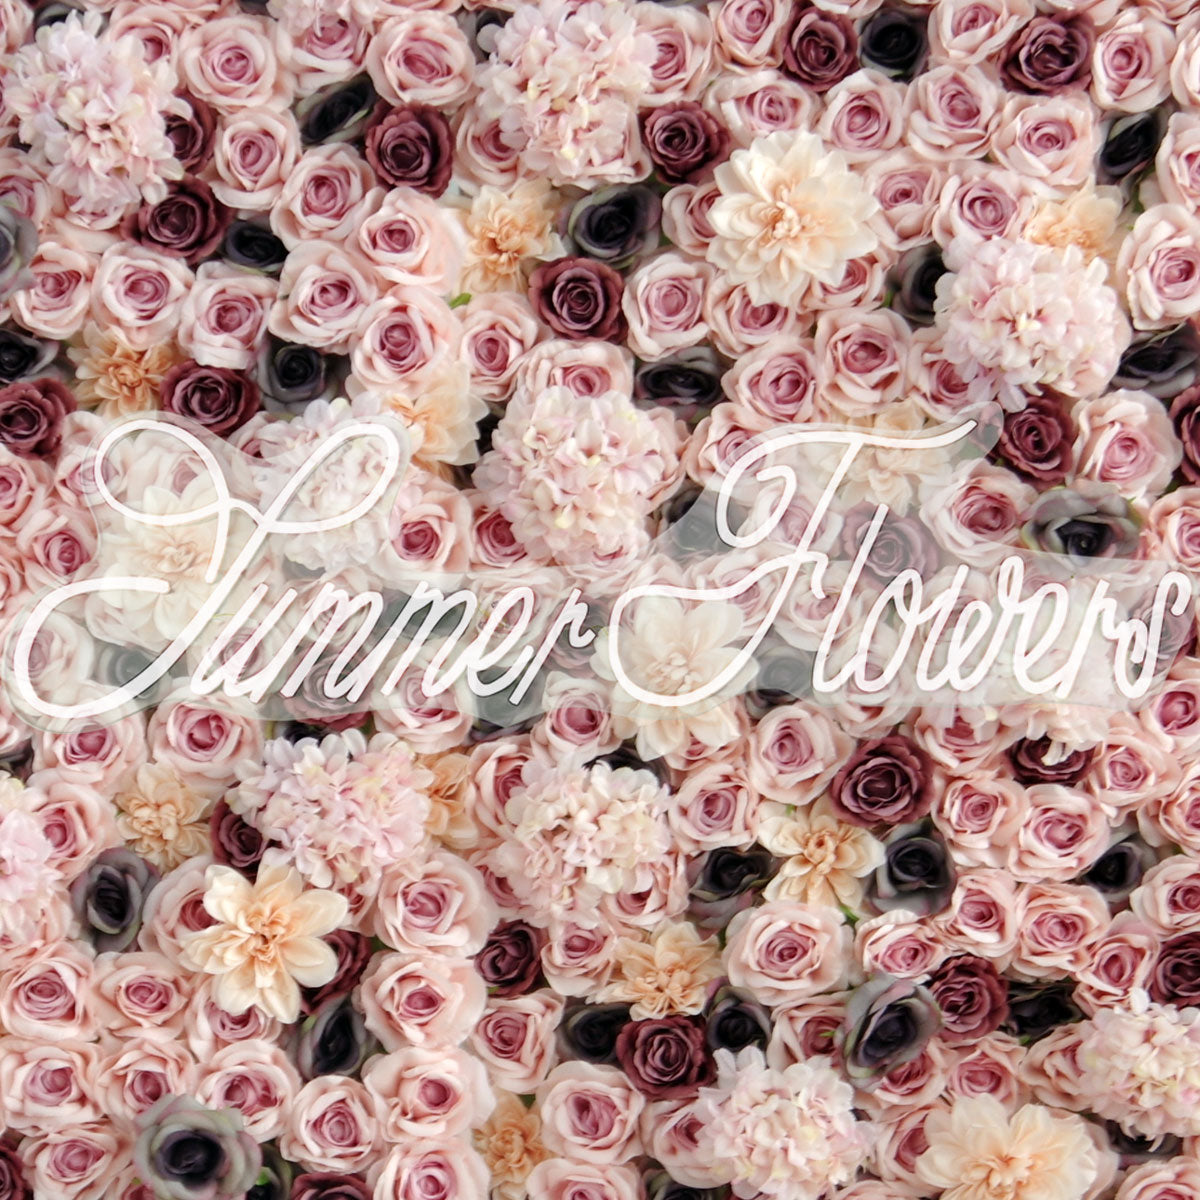 Summer Flower:CB-062 8ft*8ft Cloth Back Artificial Flower Wall Backdrop